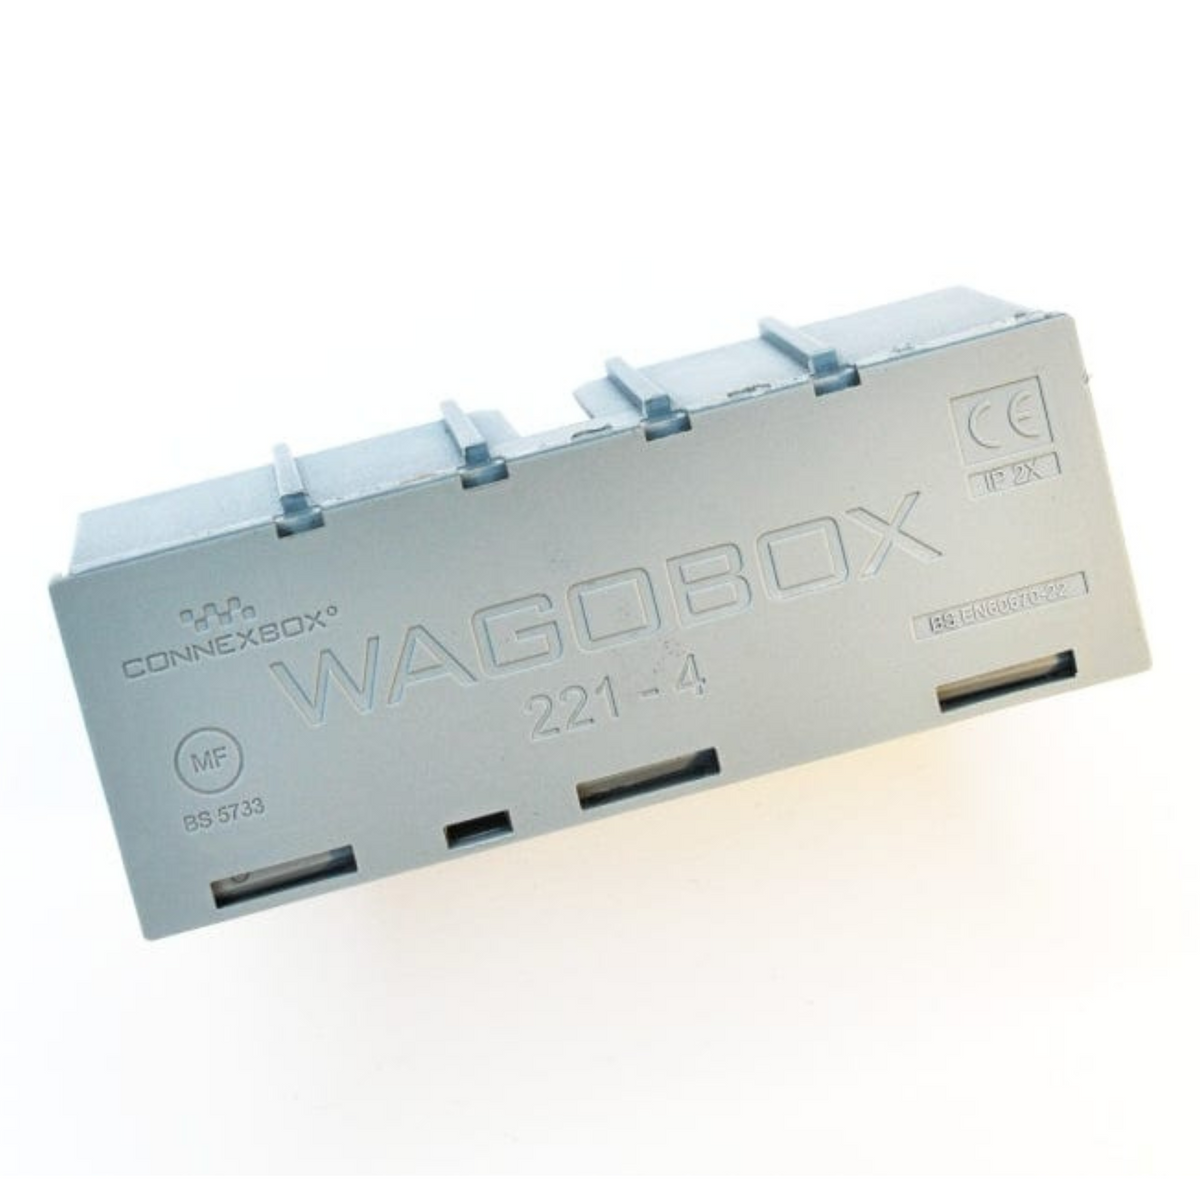 Wagobox® 221-4 in Grey